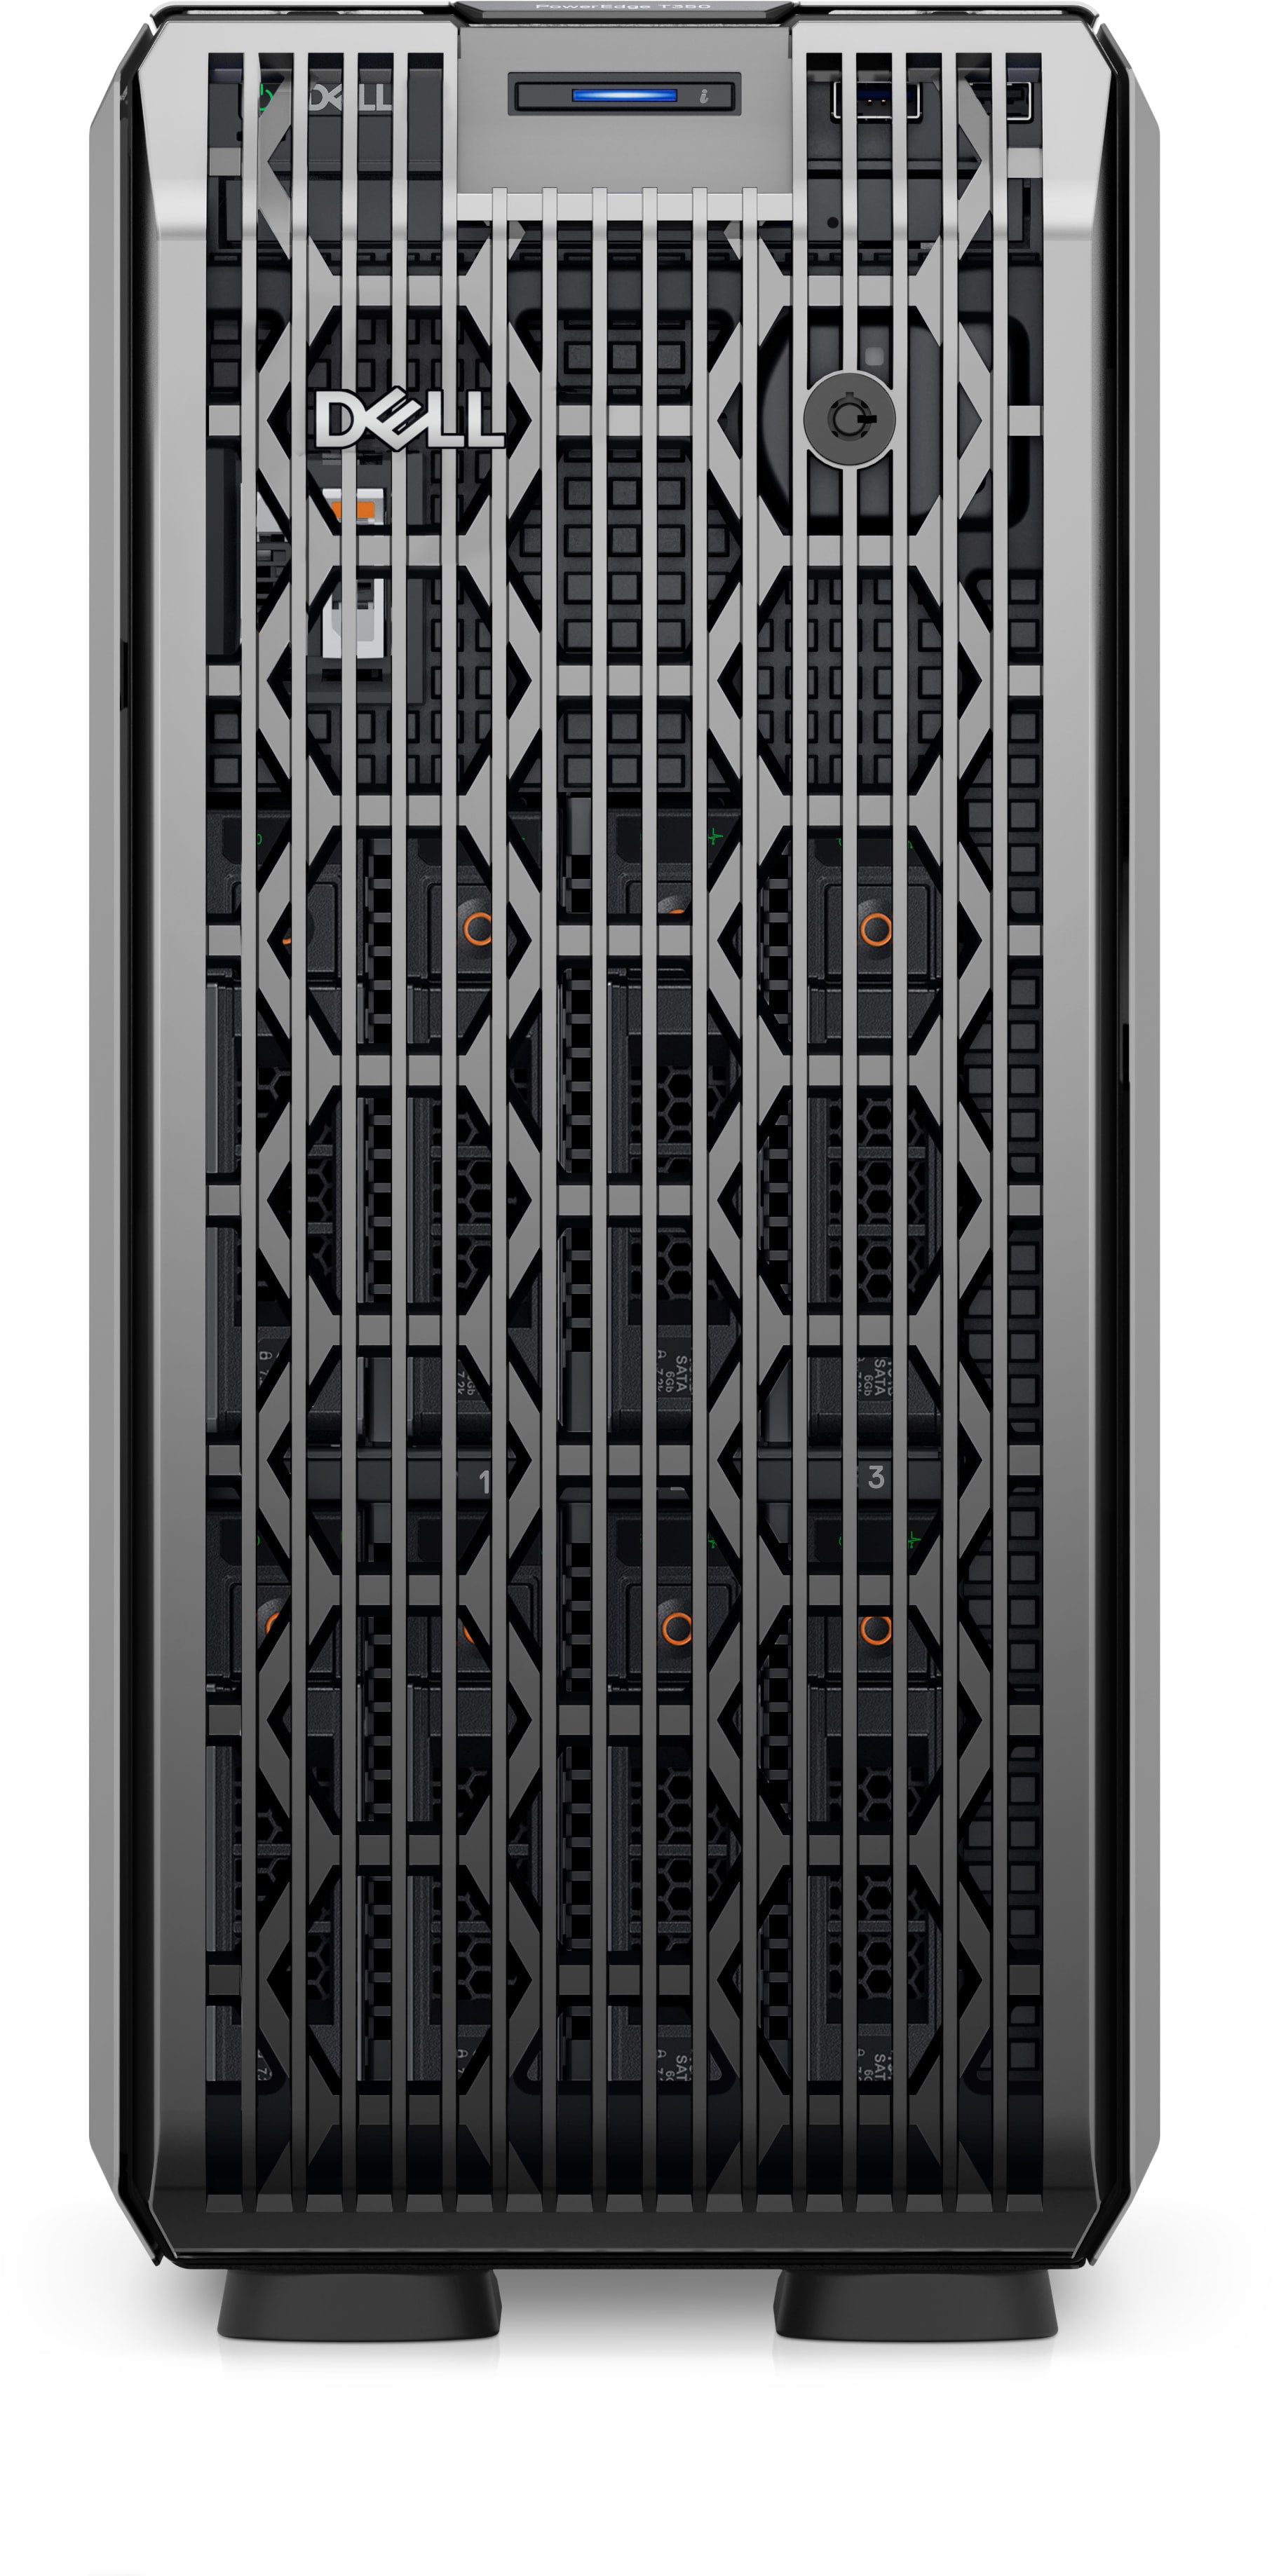 Dell PowerEdge T350 Tower Server - Benson Computers